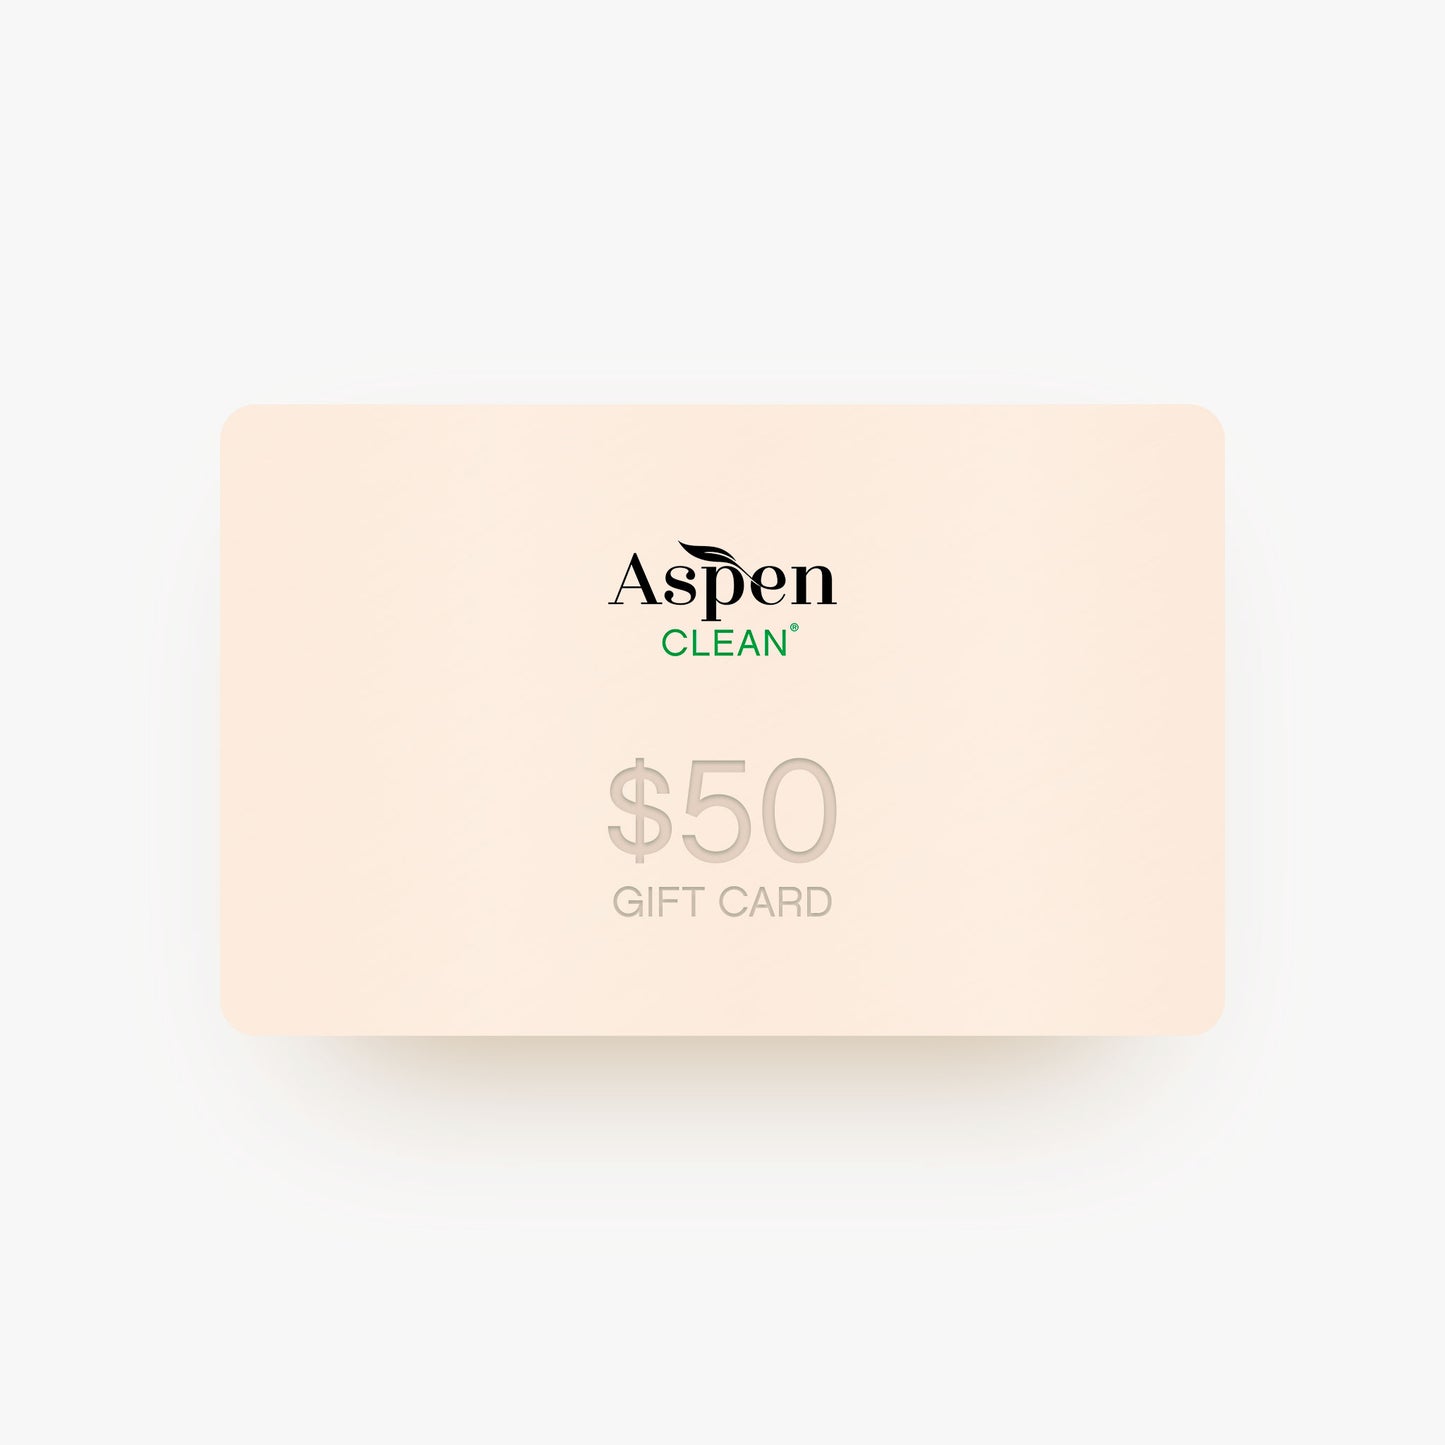 AspenClean e-gift card $50